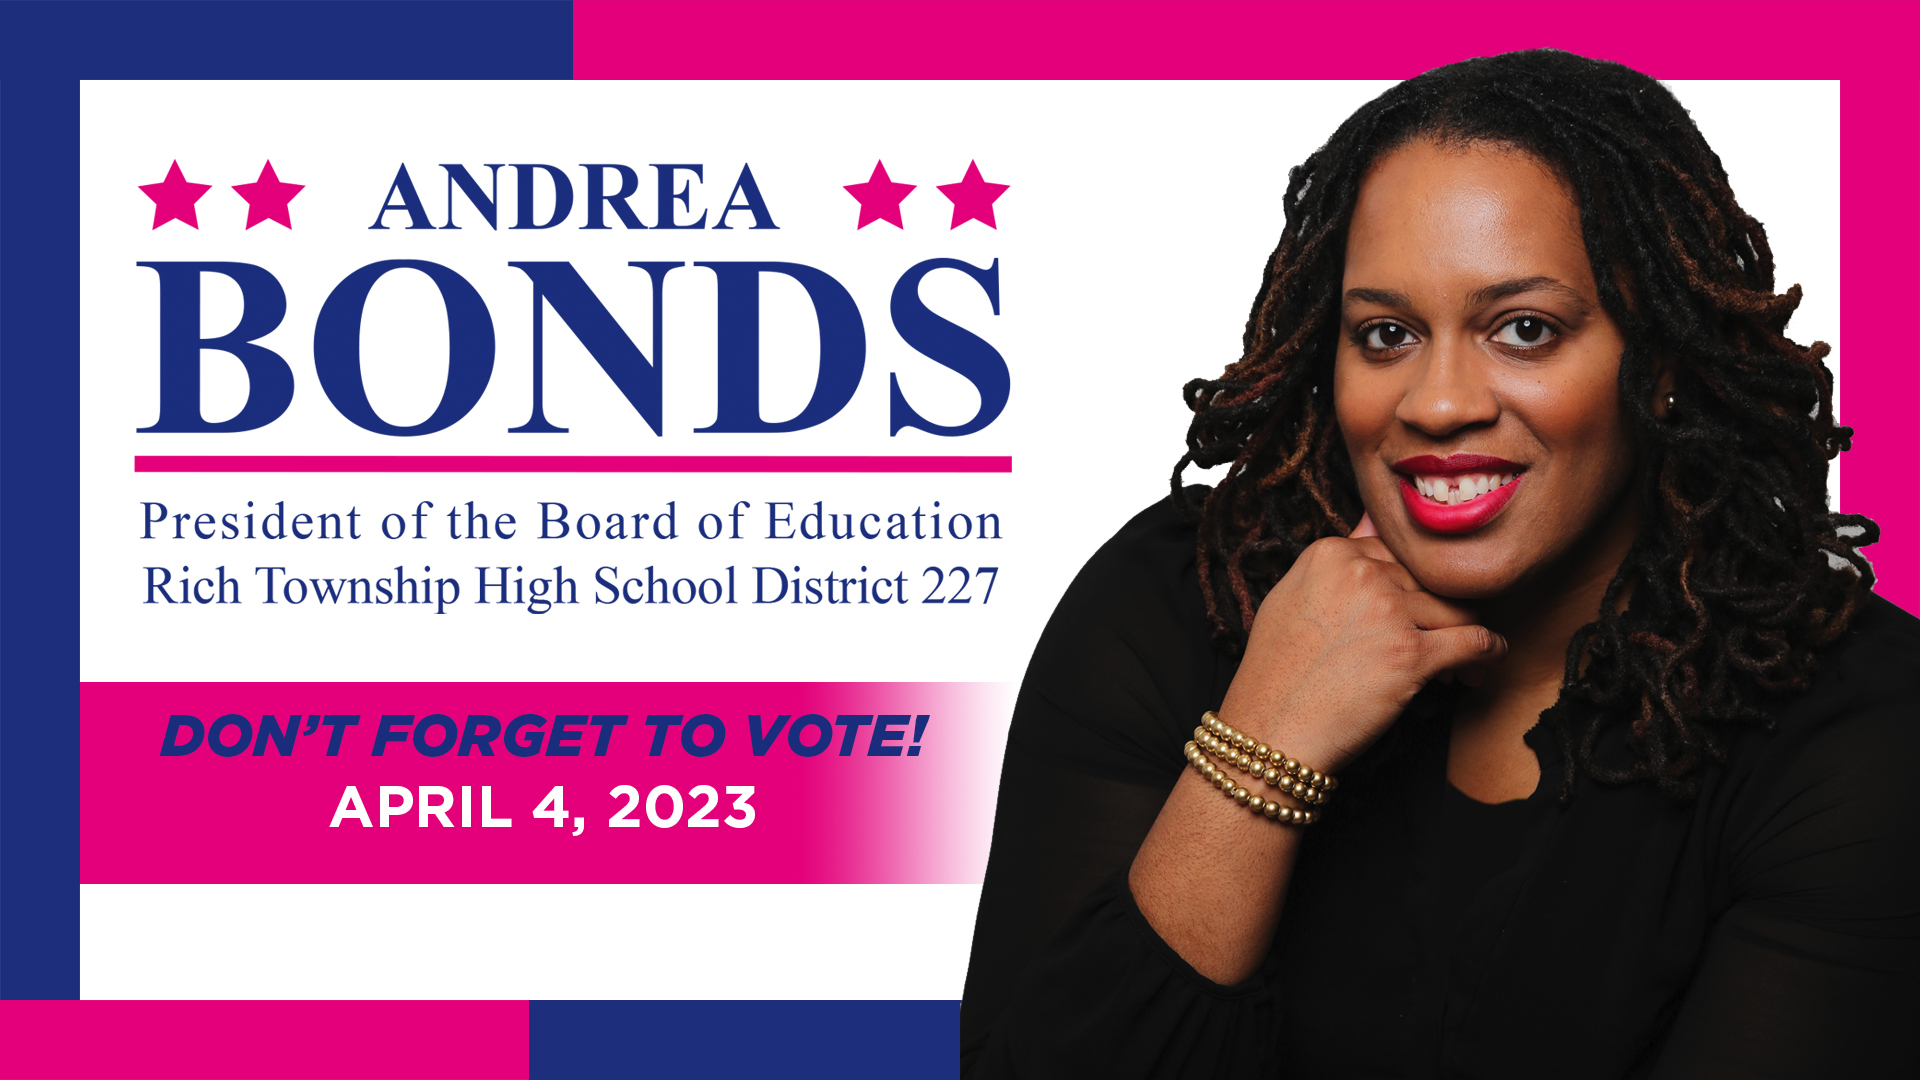 Andrea Bonds - Don't forget to vote April 4, 2023